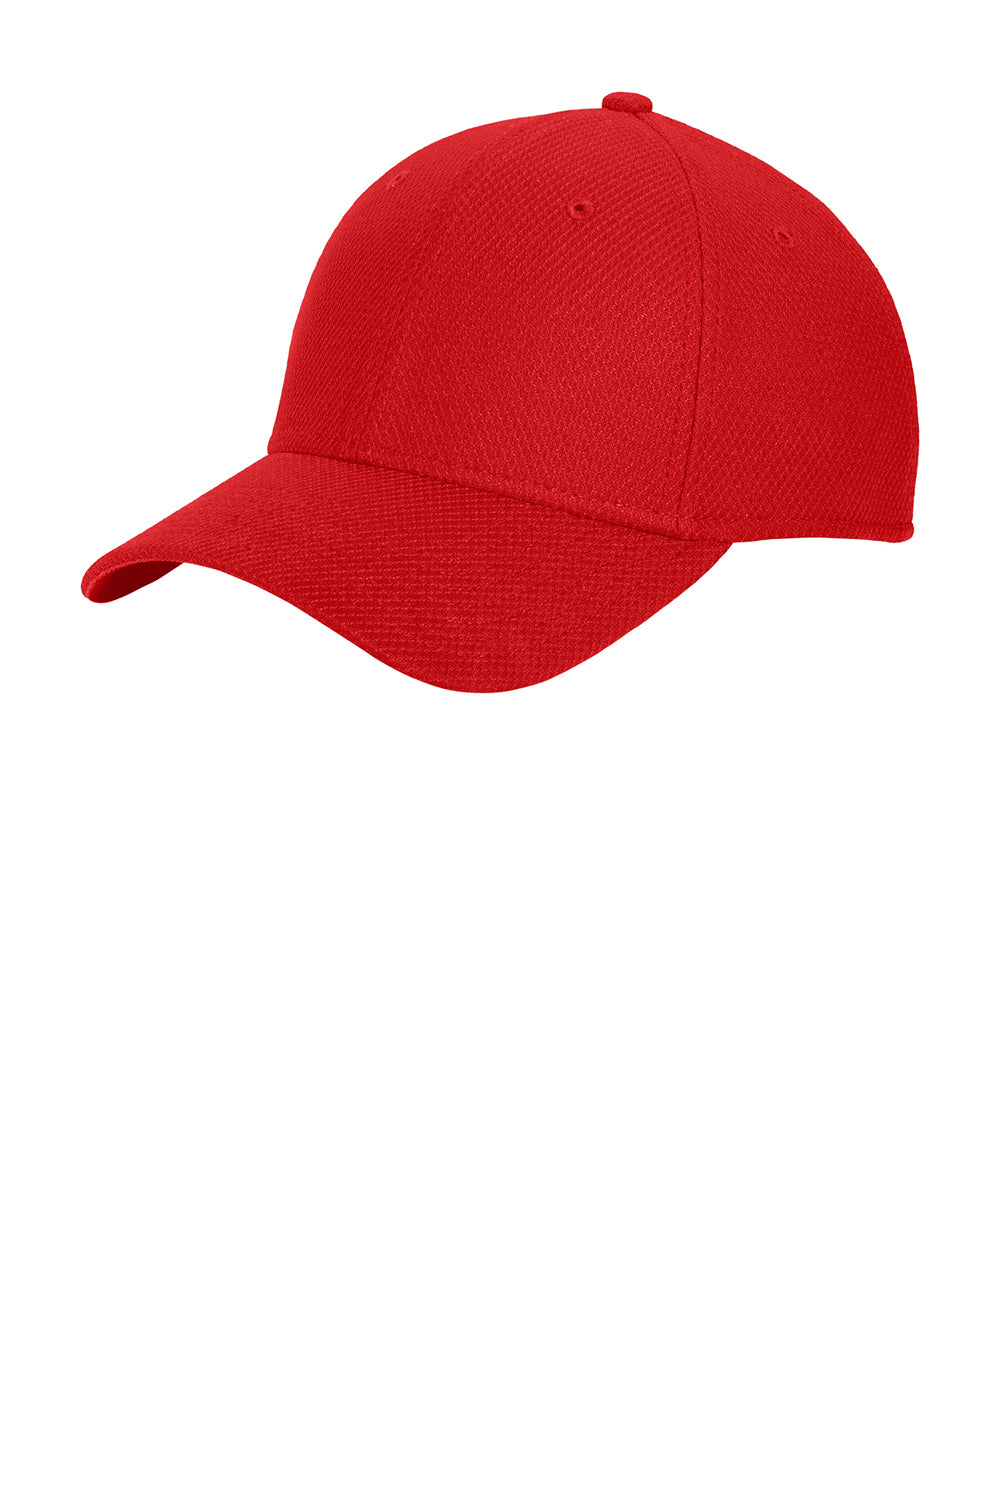 New Era NE1121 Mens Moisture Wicking Stretch Fit Hat Red Front